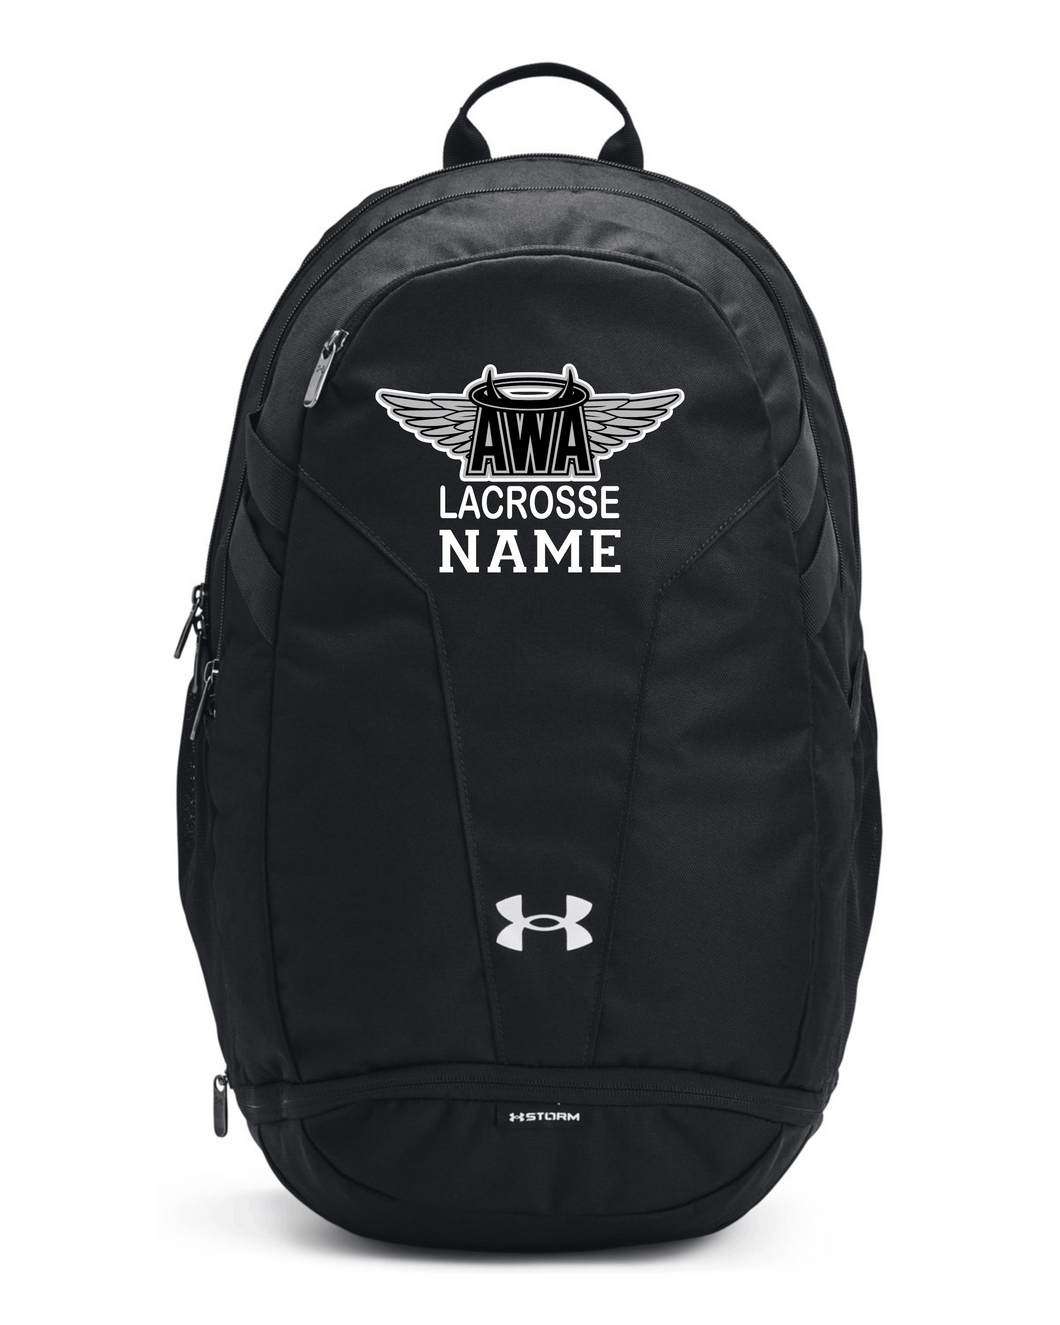 AWA-LAX-976-1 - Under Armour Hustle 5.0 TEAM Backpack - AWA Girls Lacrosse Logo & Personalized Name